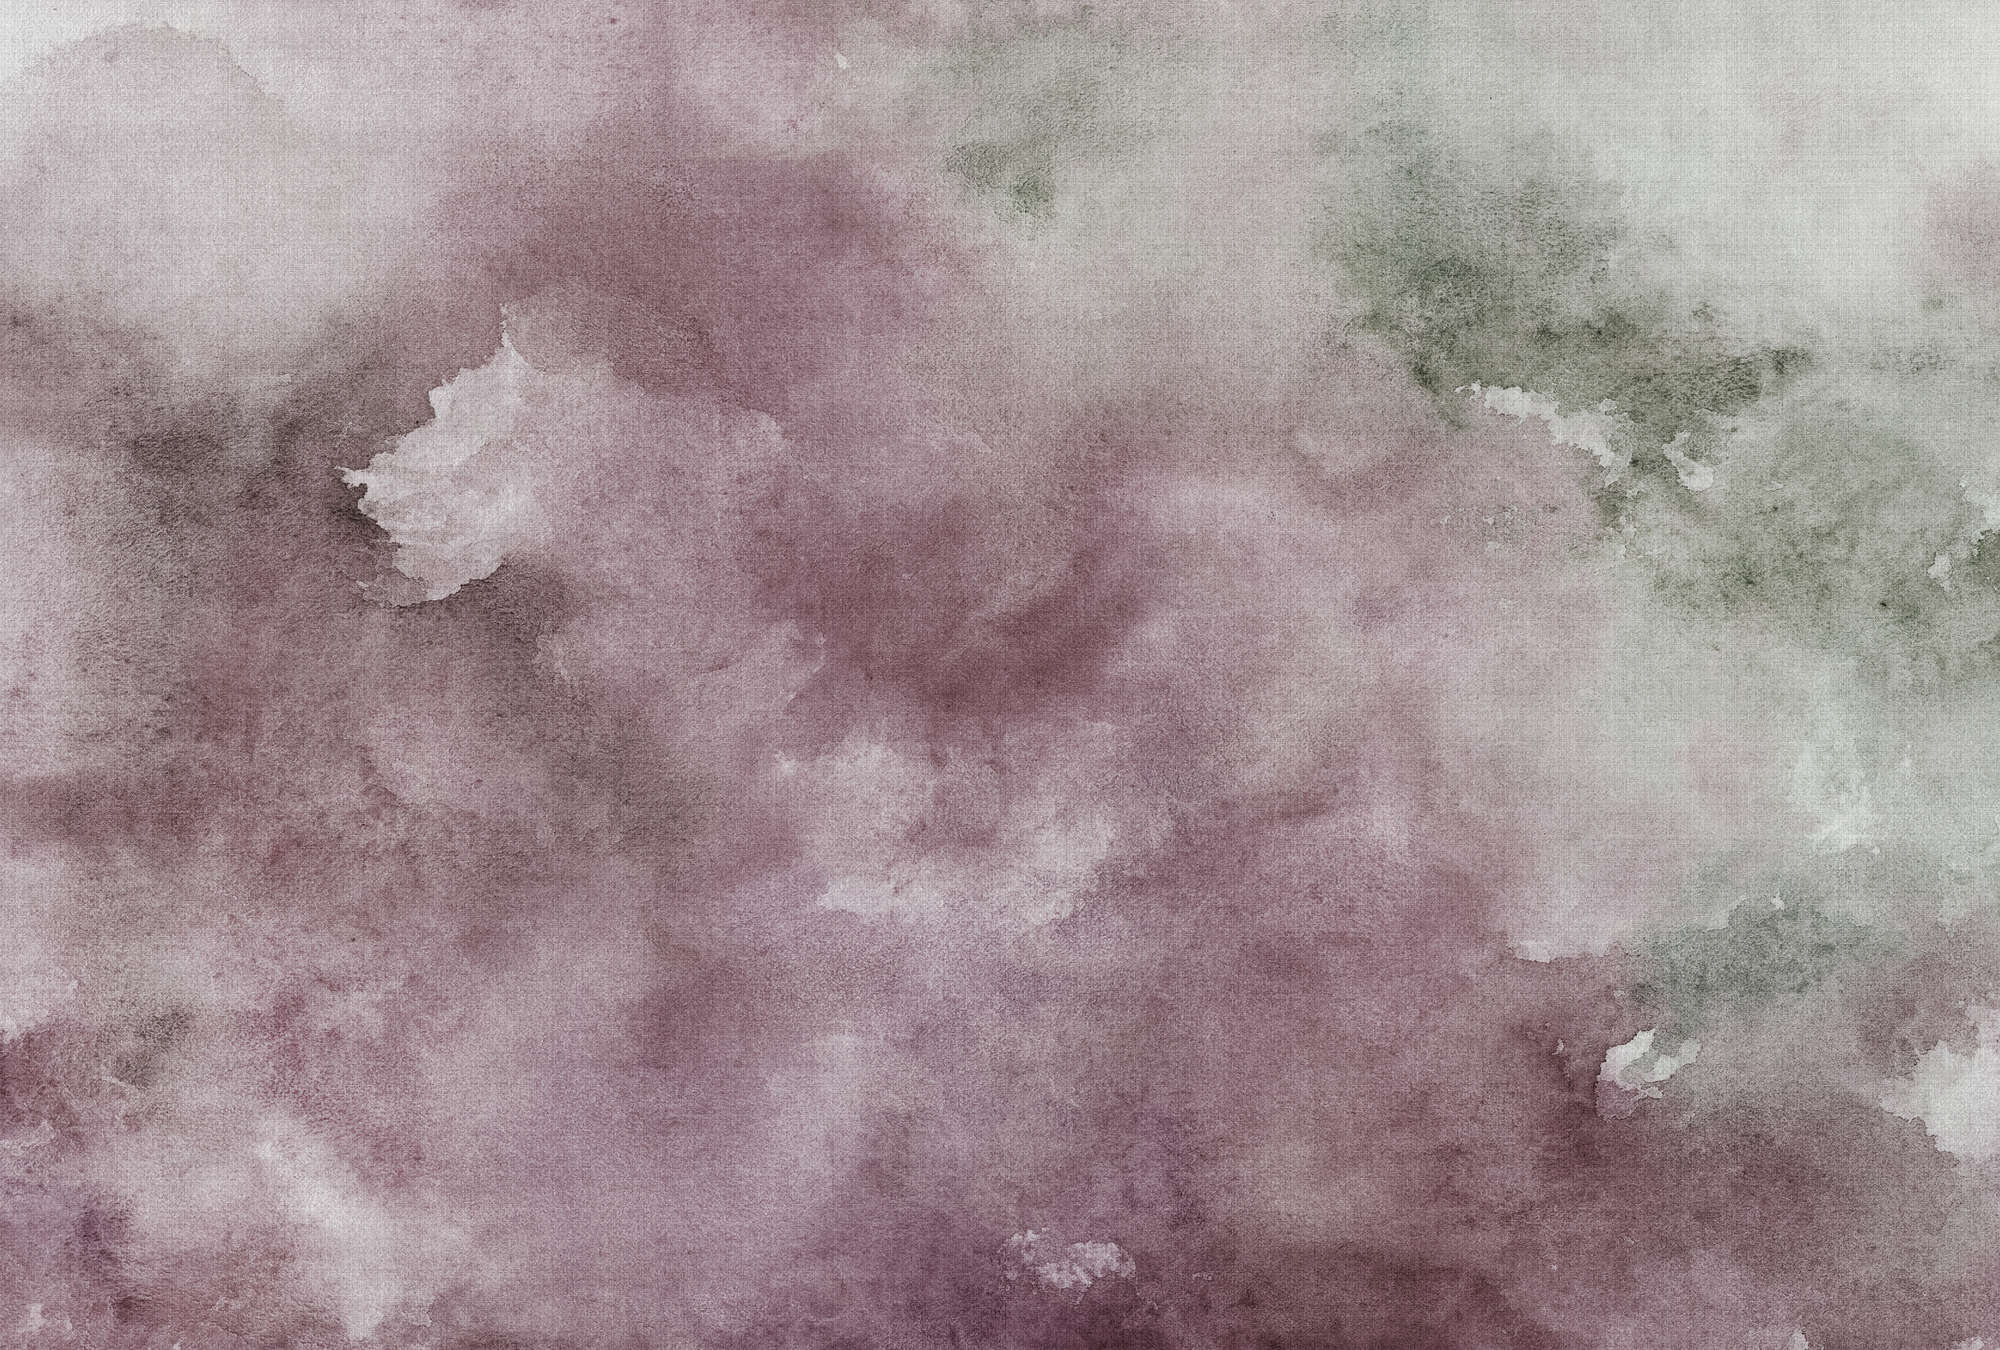             Acuarelas 2 - Papel Pintado Acuarelas Motivo Violeta - Textura Lino Natural - Beige, Marrón | Perla Liso No Tejido
        